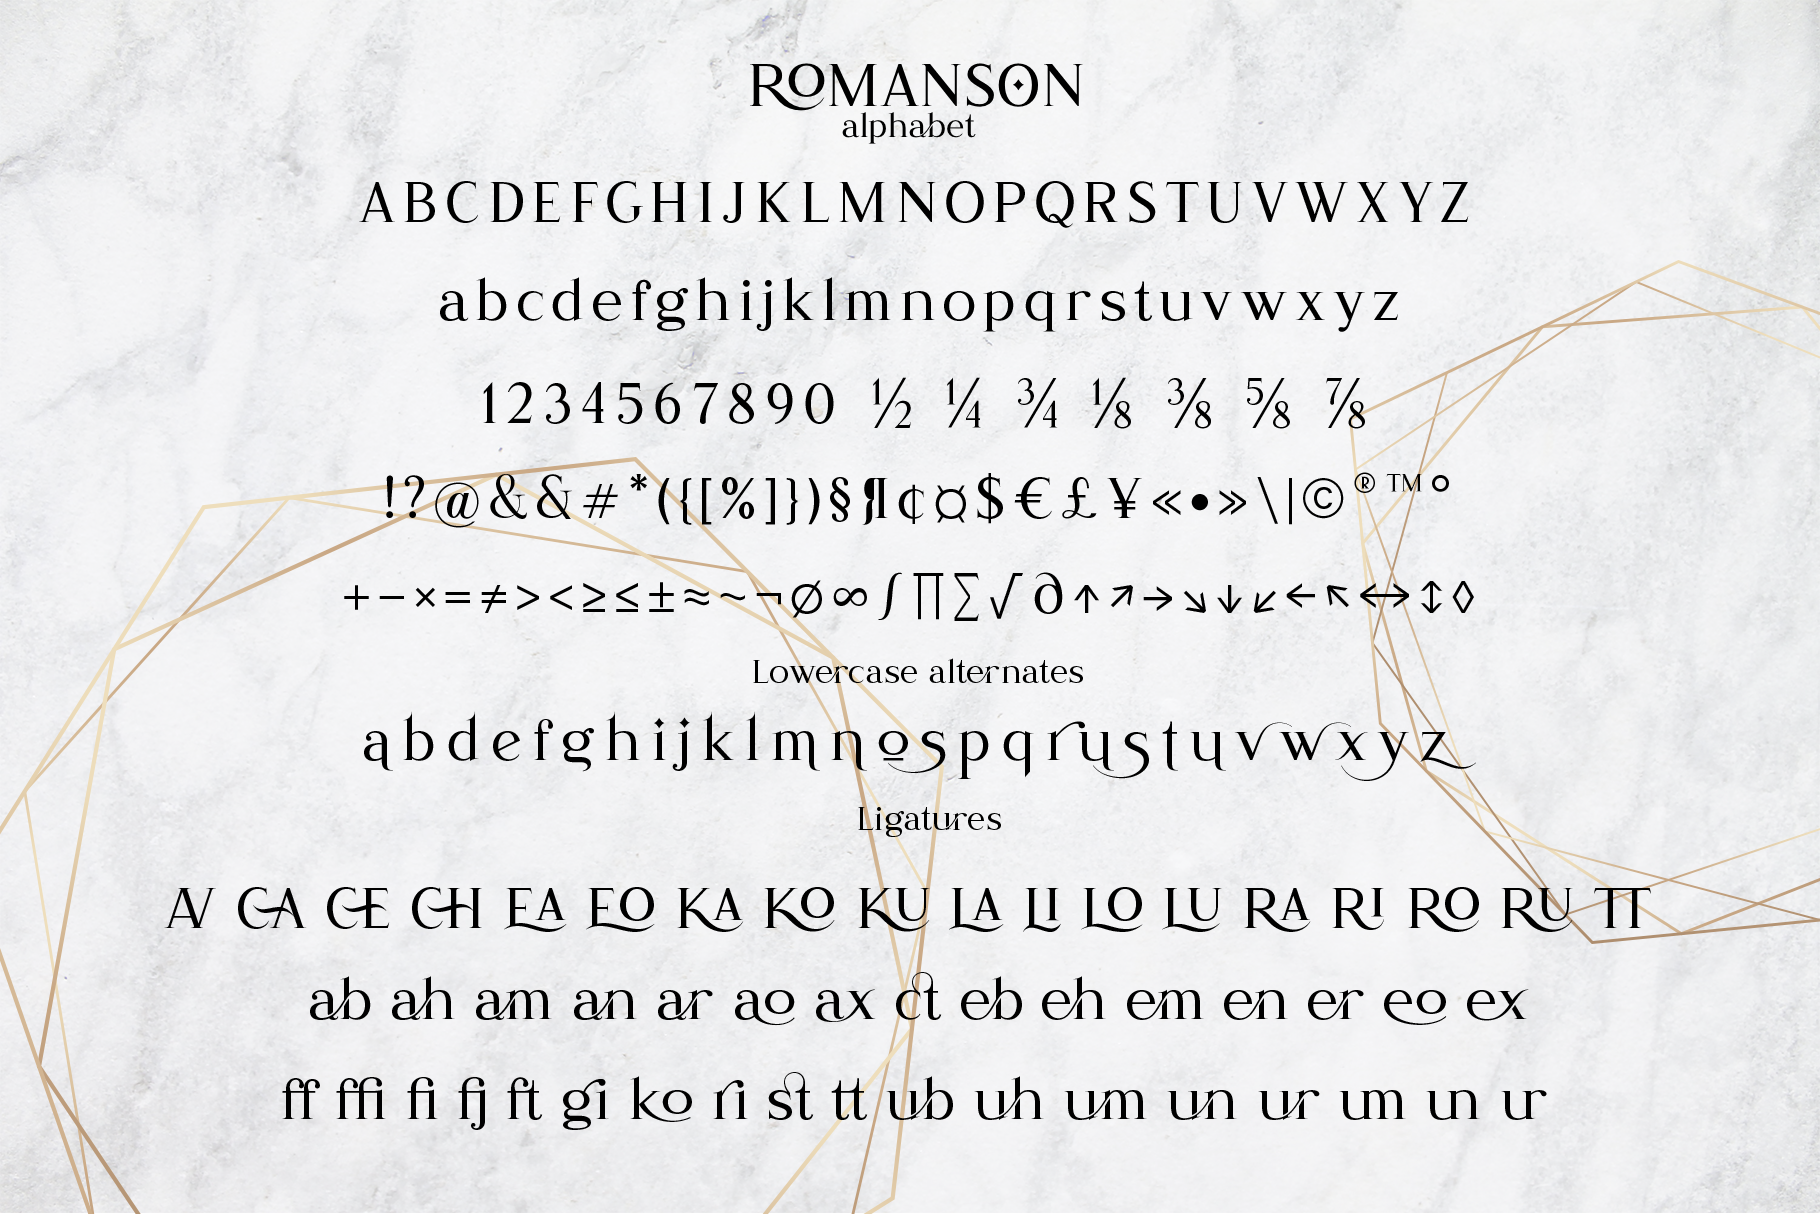 Romanson By Larin Type Co Thehungryjpeg Com